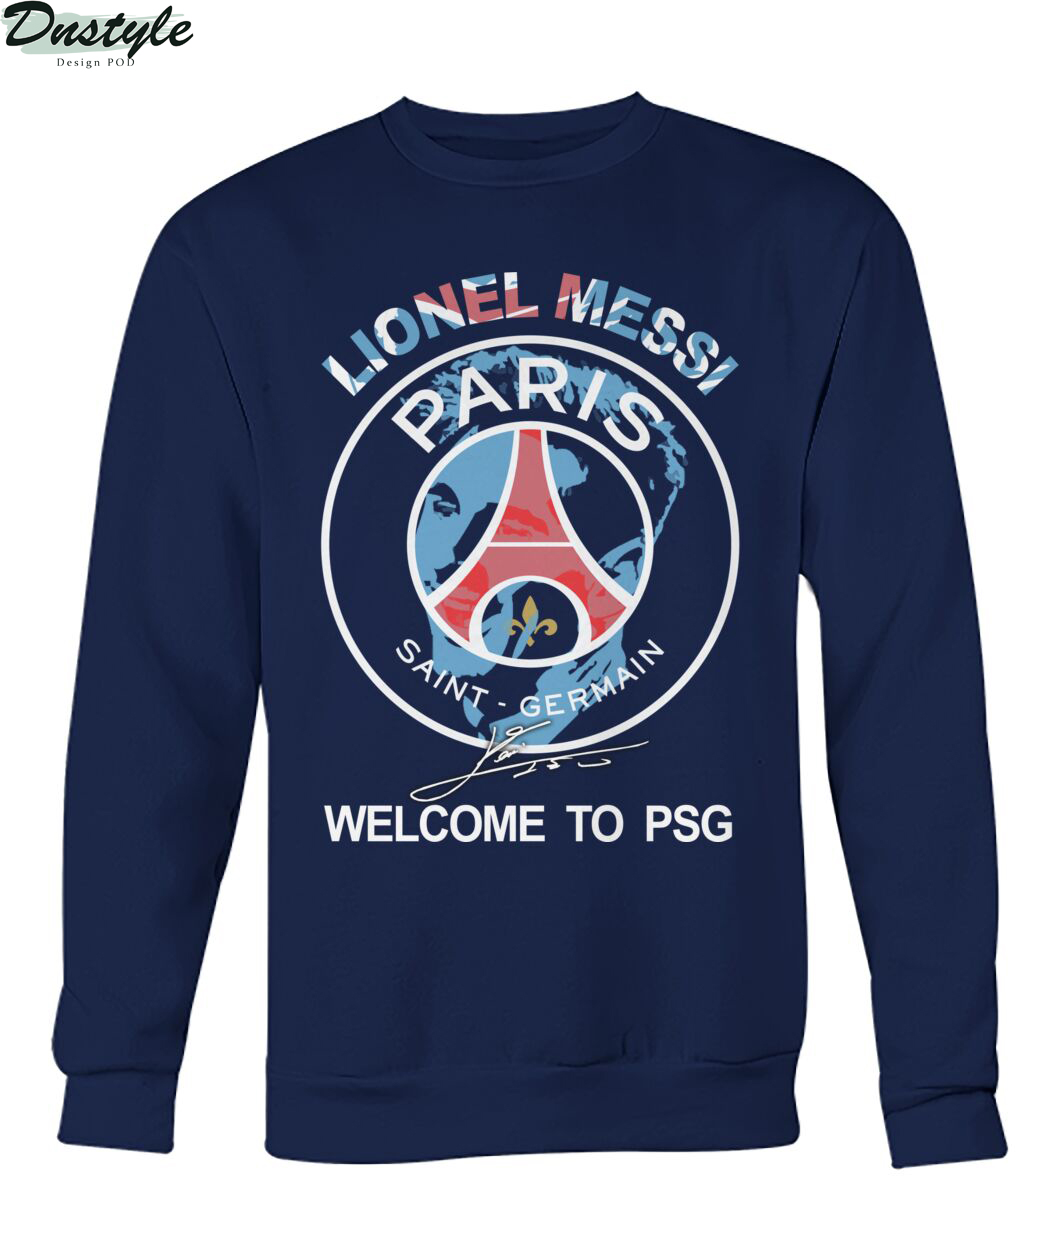 Lionel Messi signature welcome to PSG sweatshirt